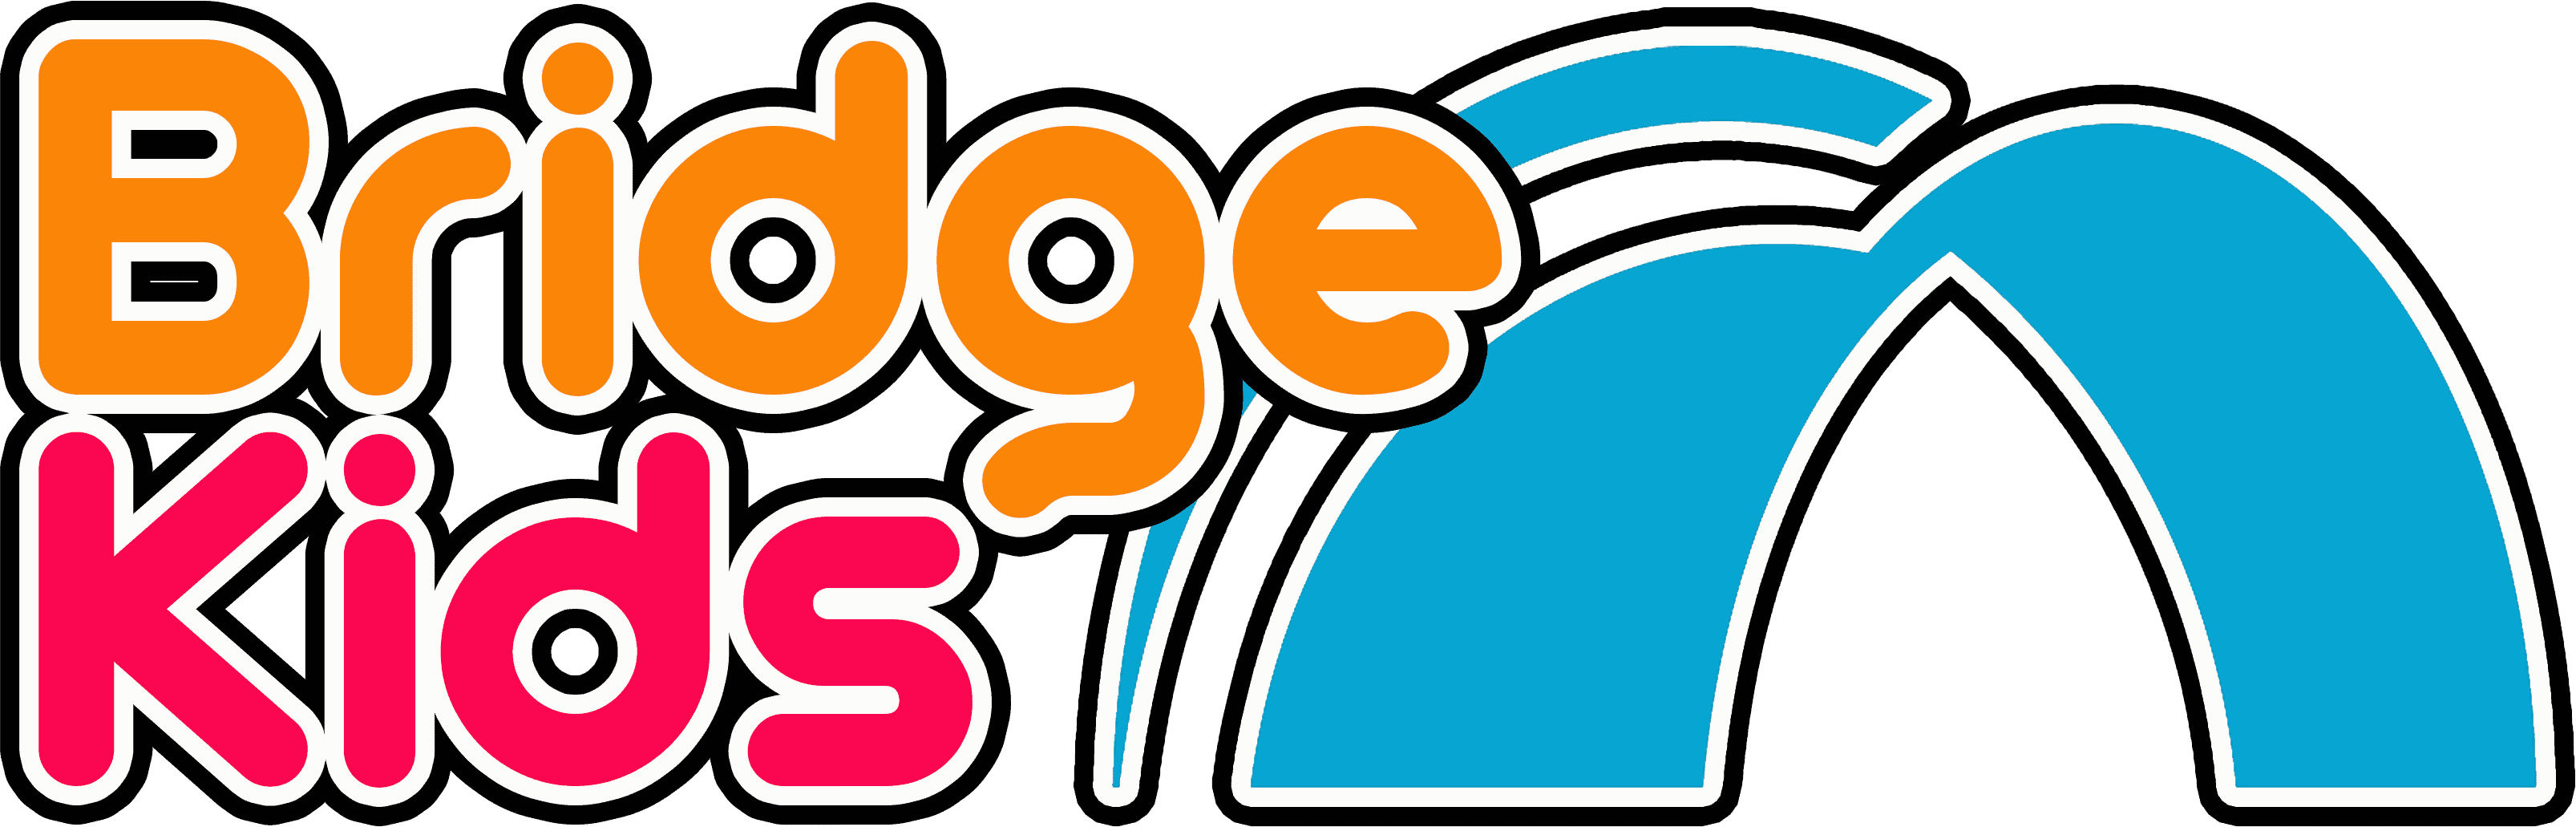 New Bridge Kids Logo